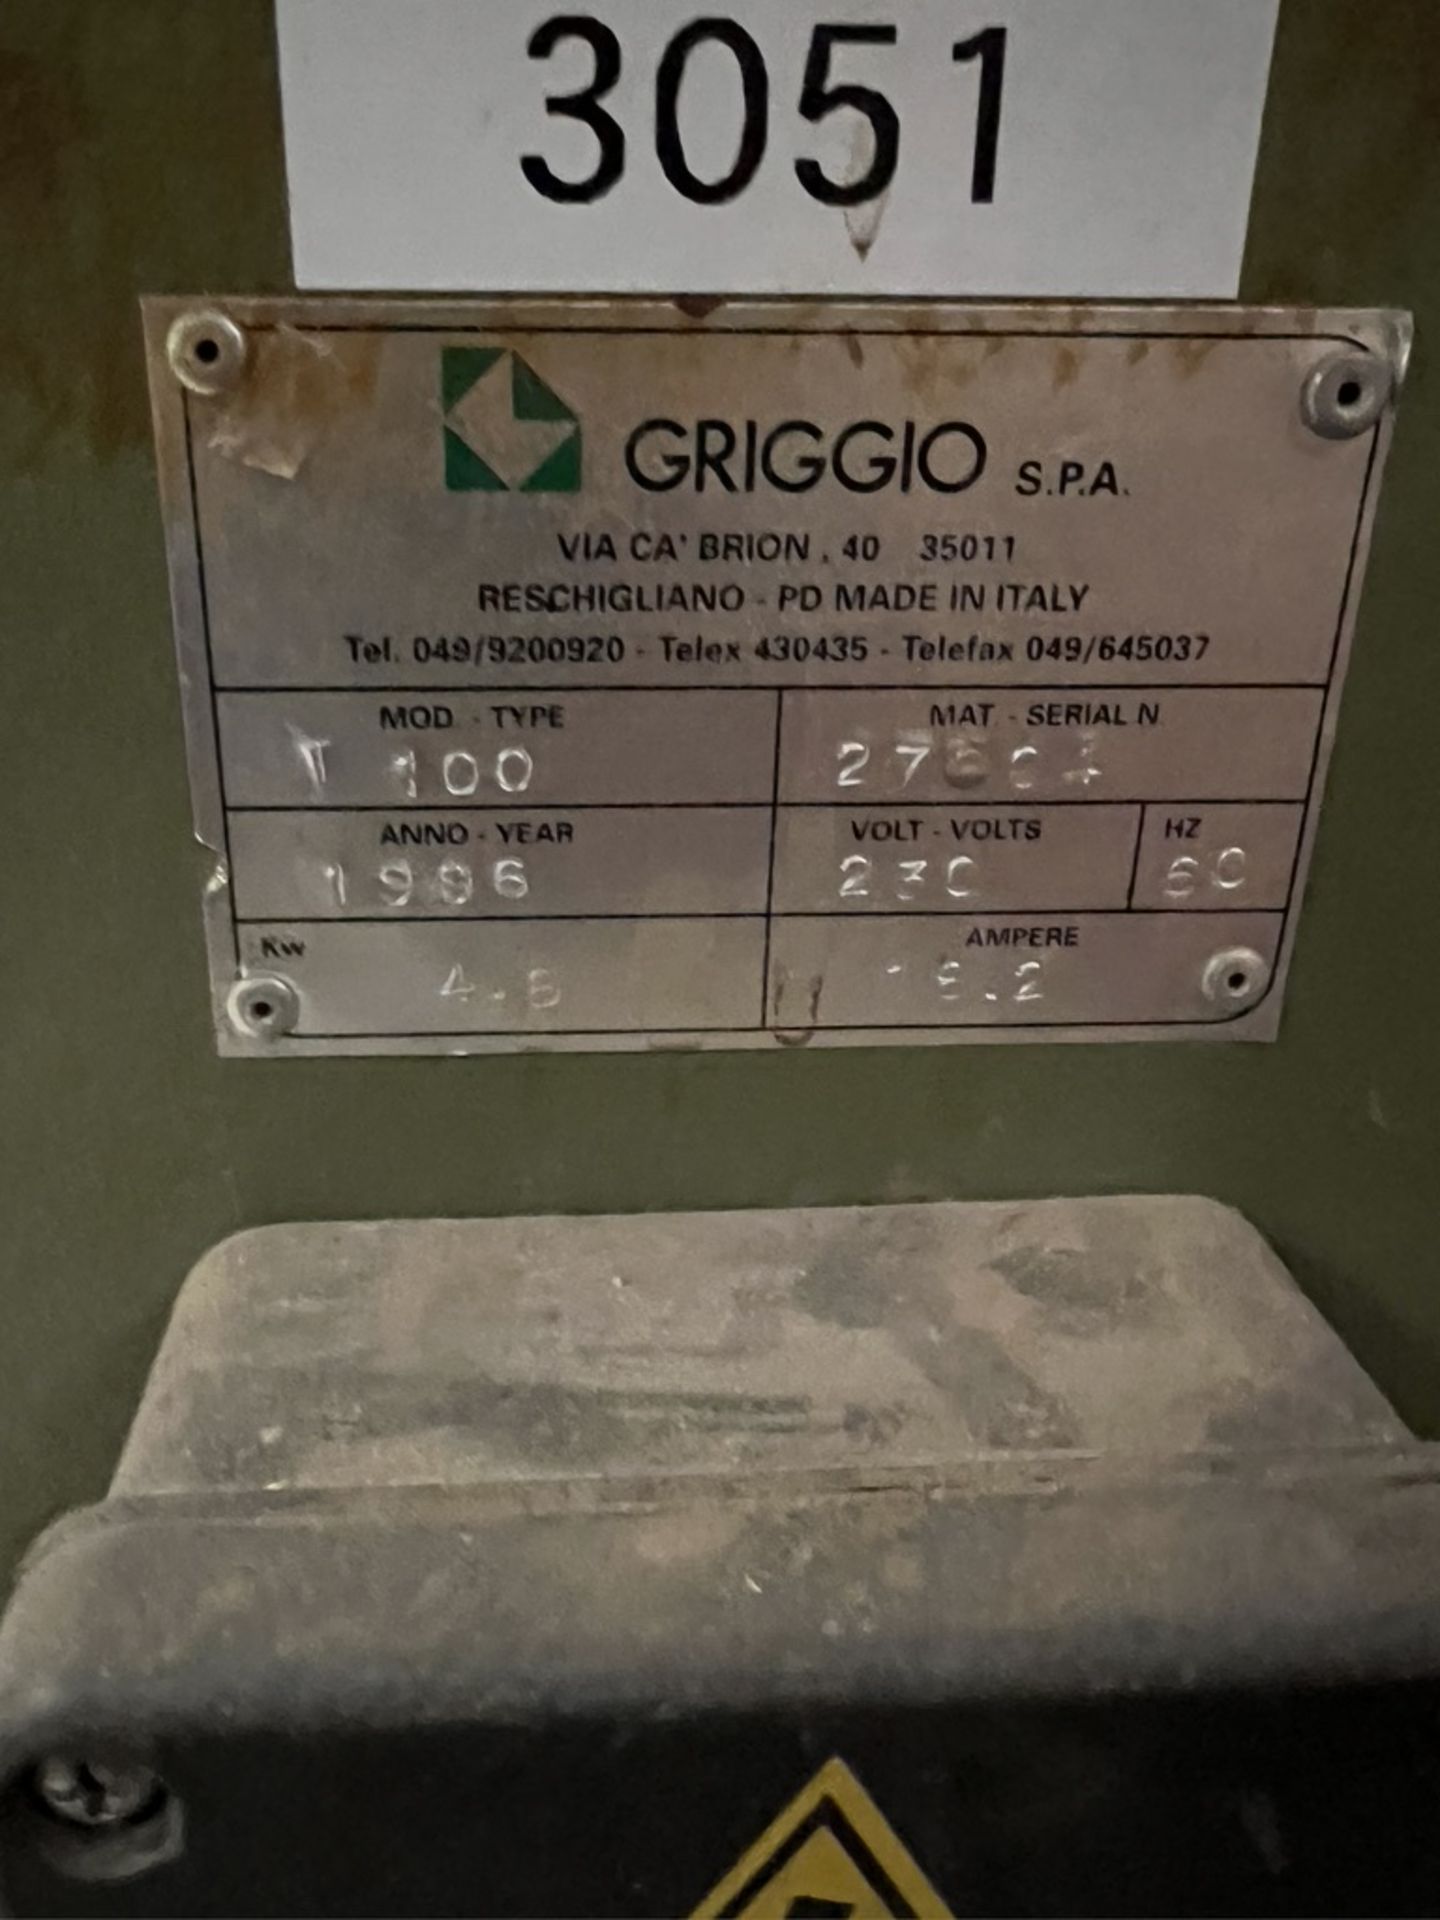 GRIGGIO SHAPER WITH POWERMATIC POWER FEEDER, SHAPER MODEL T 100, S/N 27504, POWER FEEDER MODEL PH - Image 7 of 13